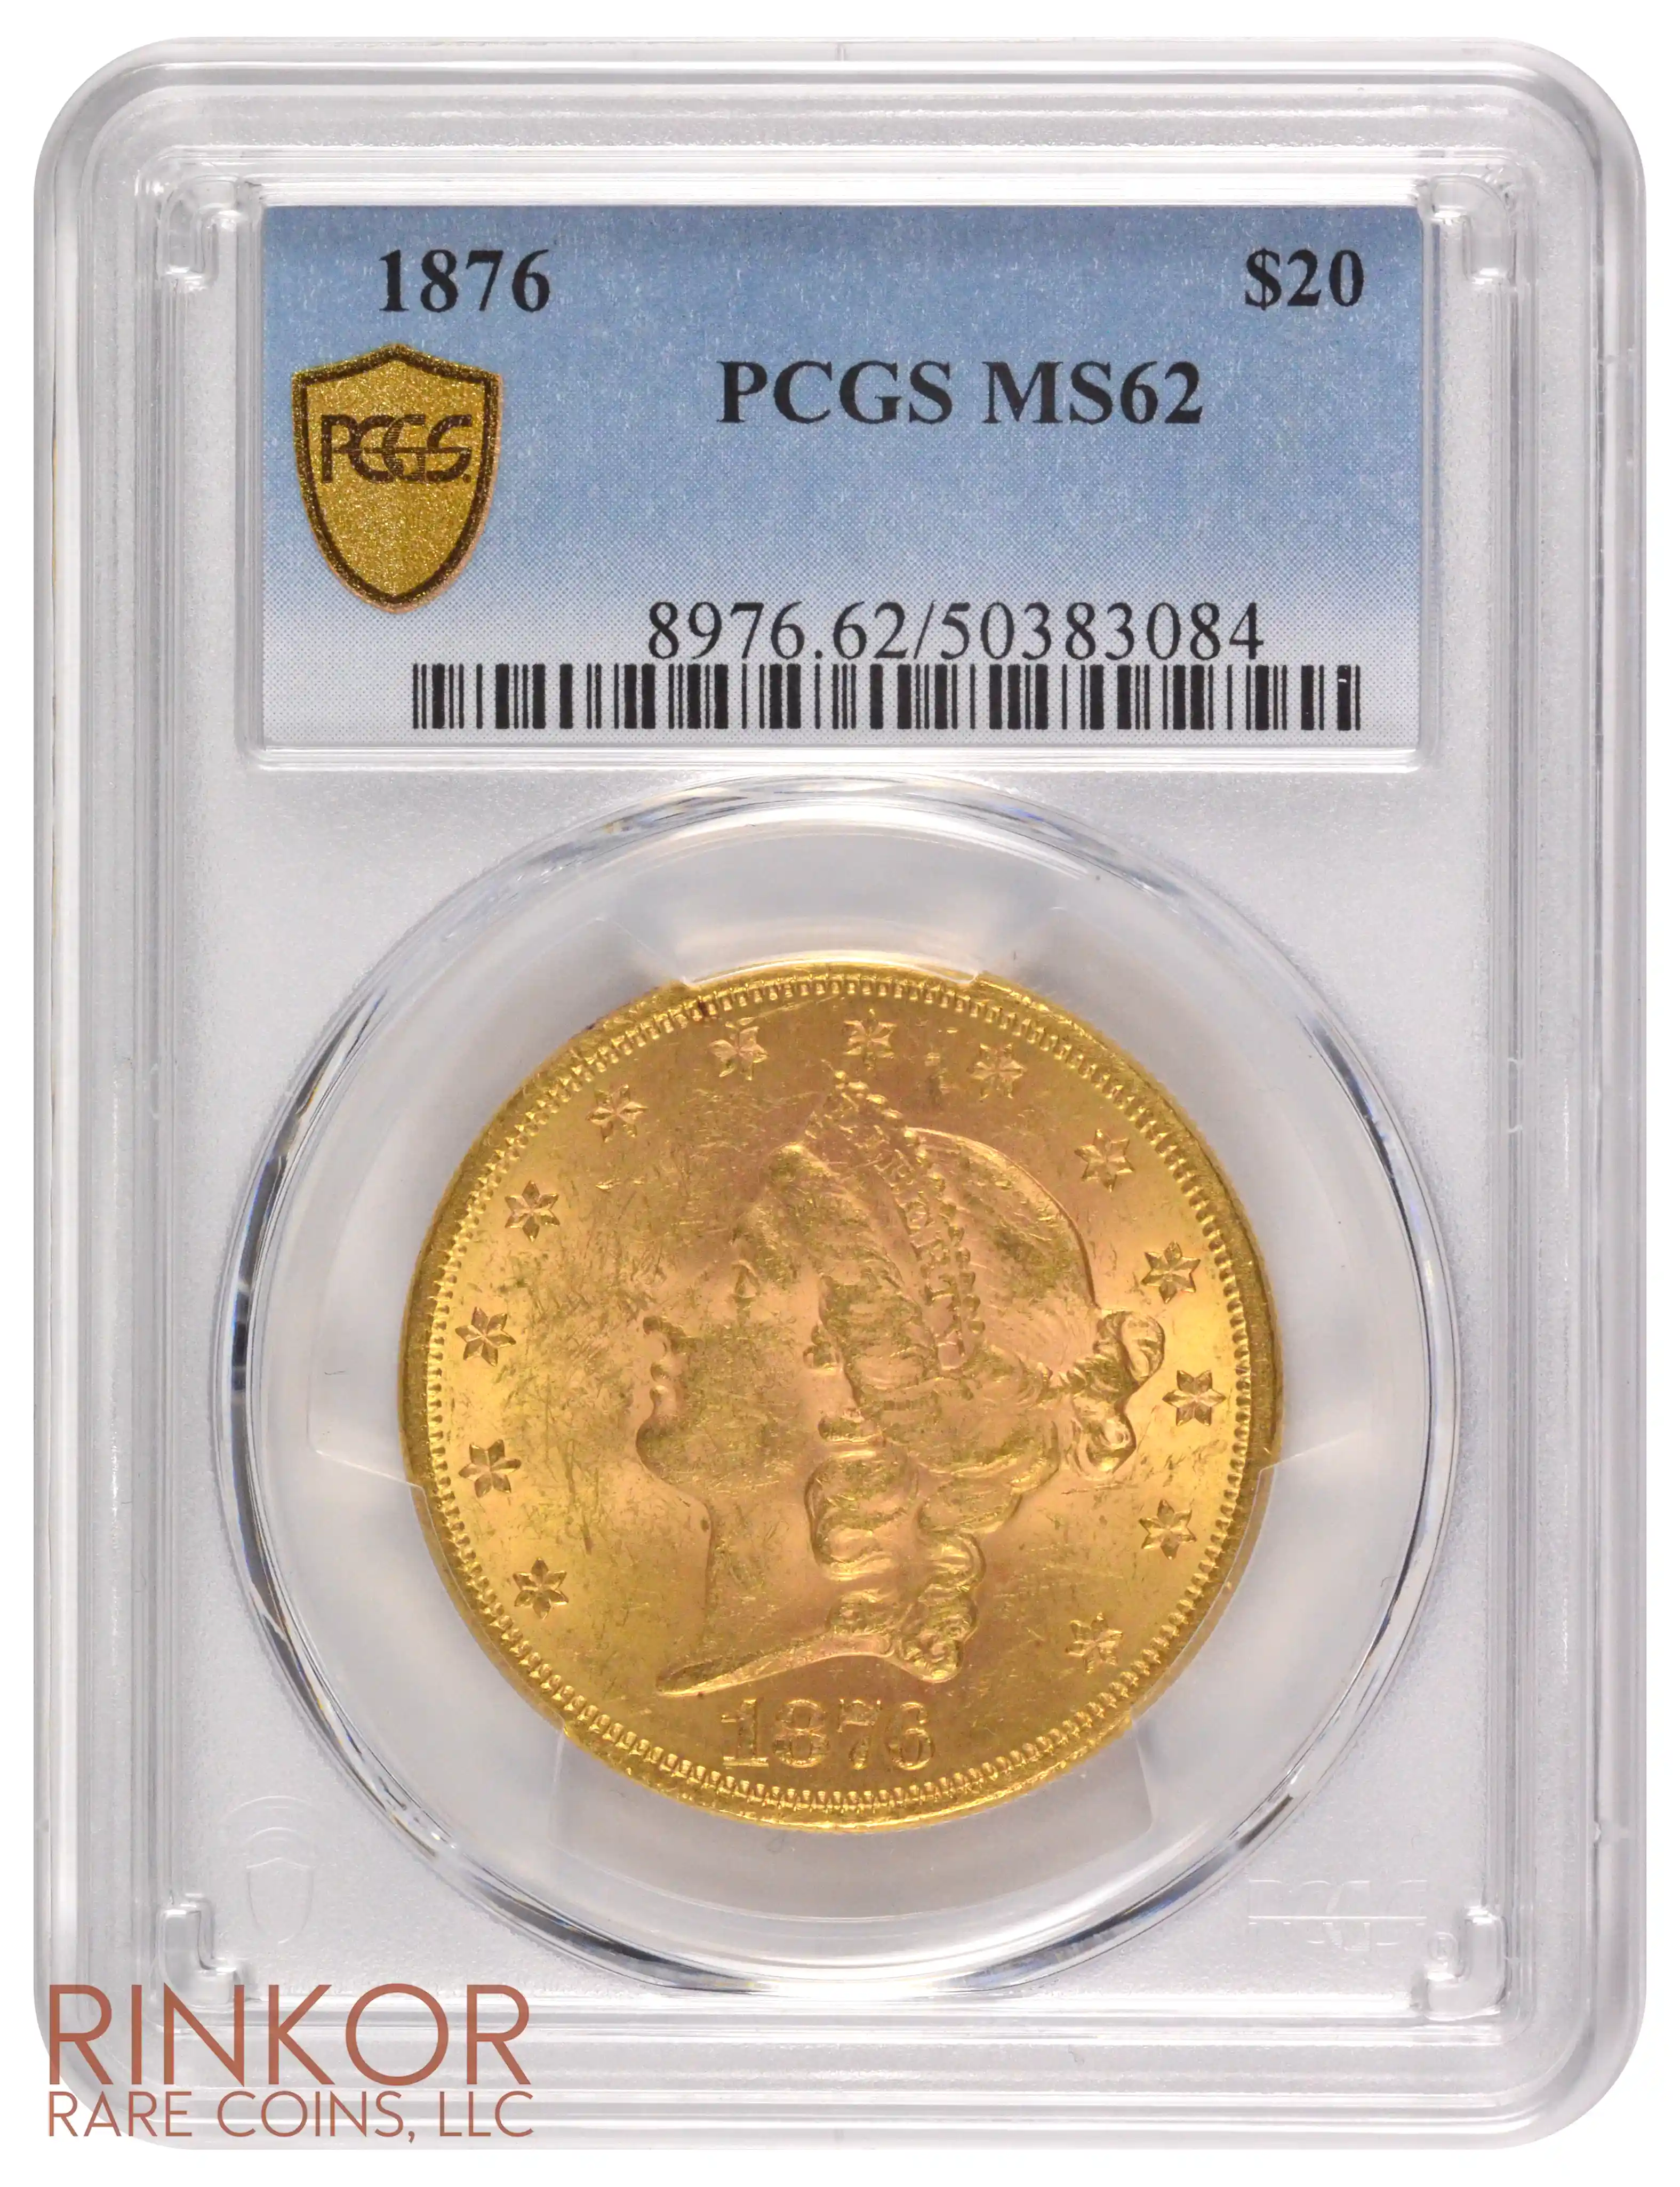 1876 Liberty Head $20 PCGS MS 62